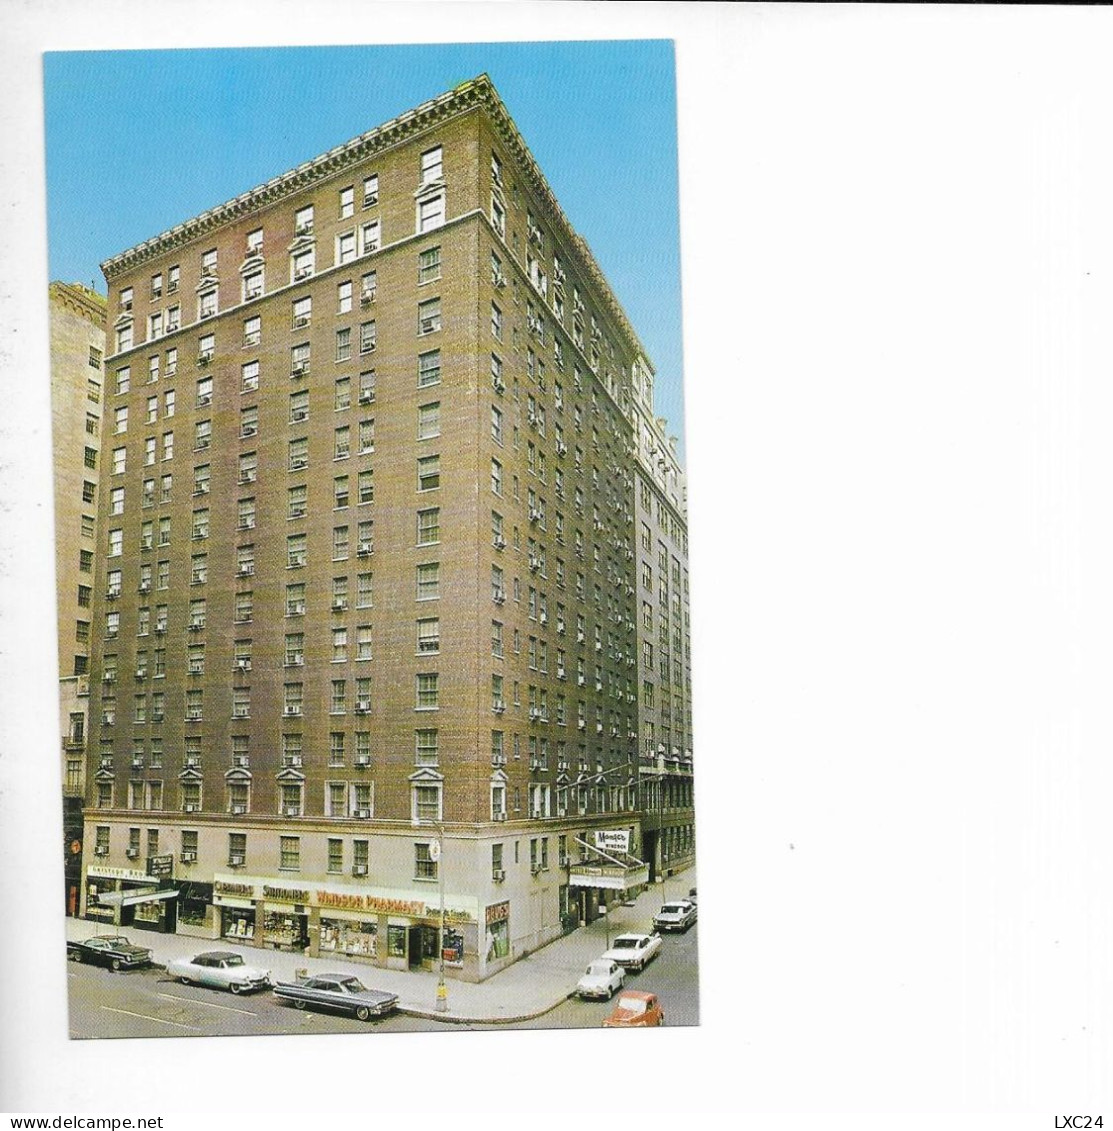 THE MANGER WINDSOR HOTEL. NEW YORK. - Bares, Hoteles Y Restaurantes